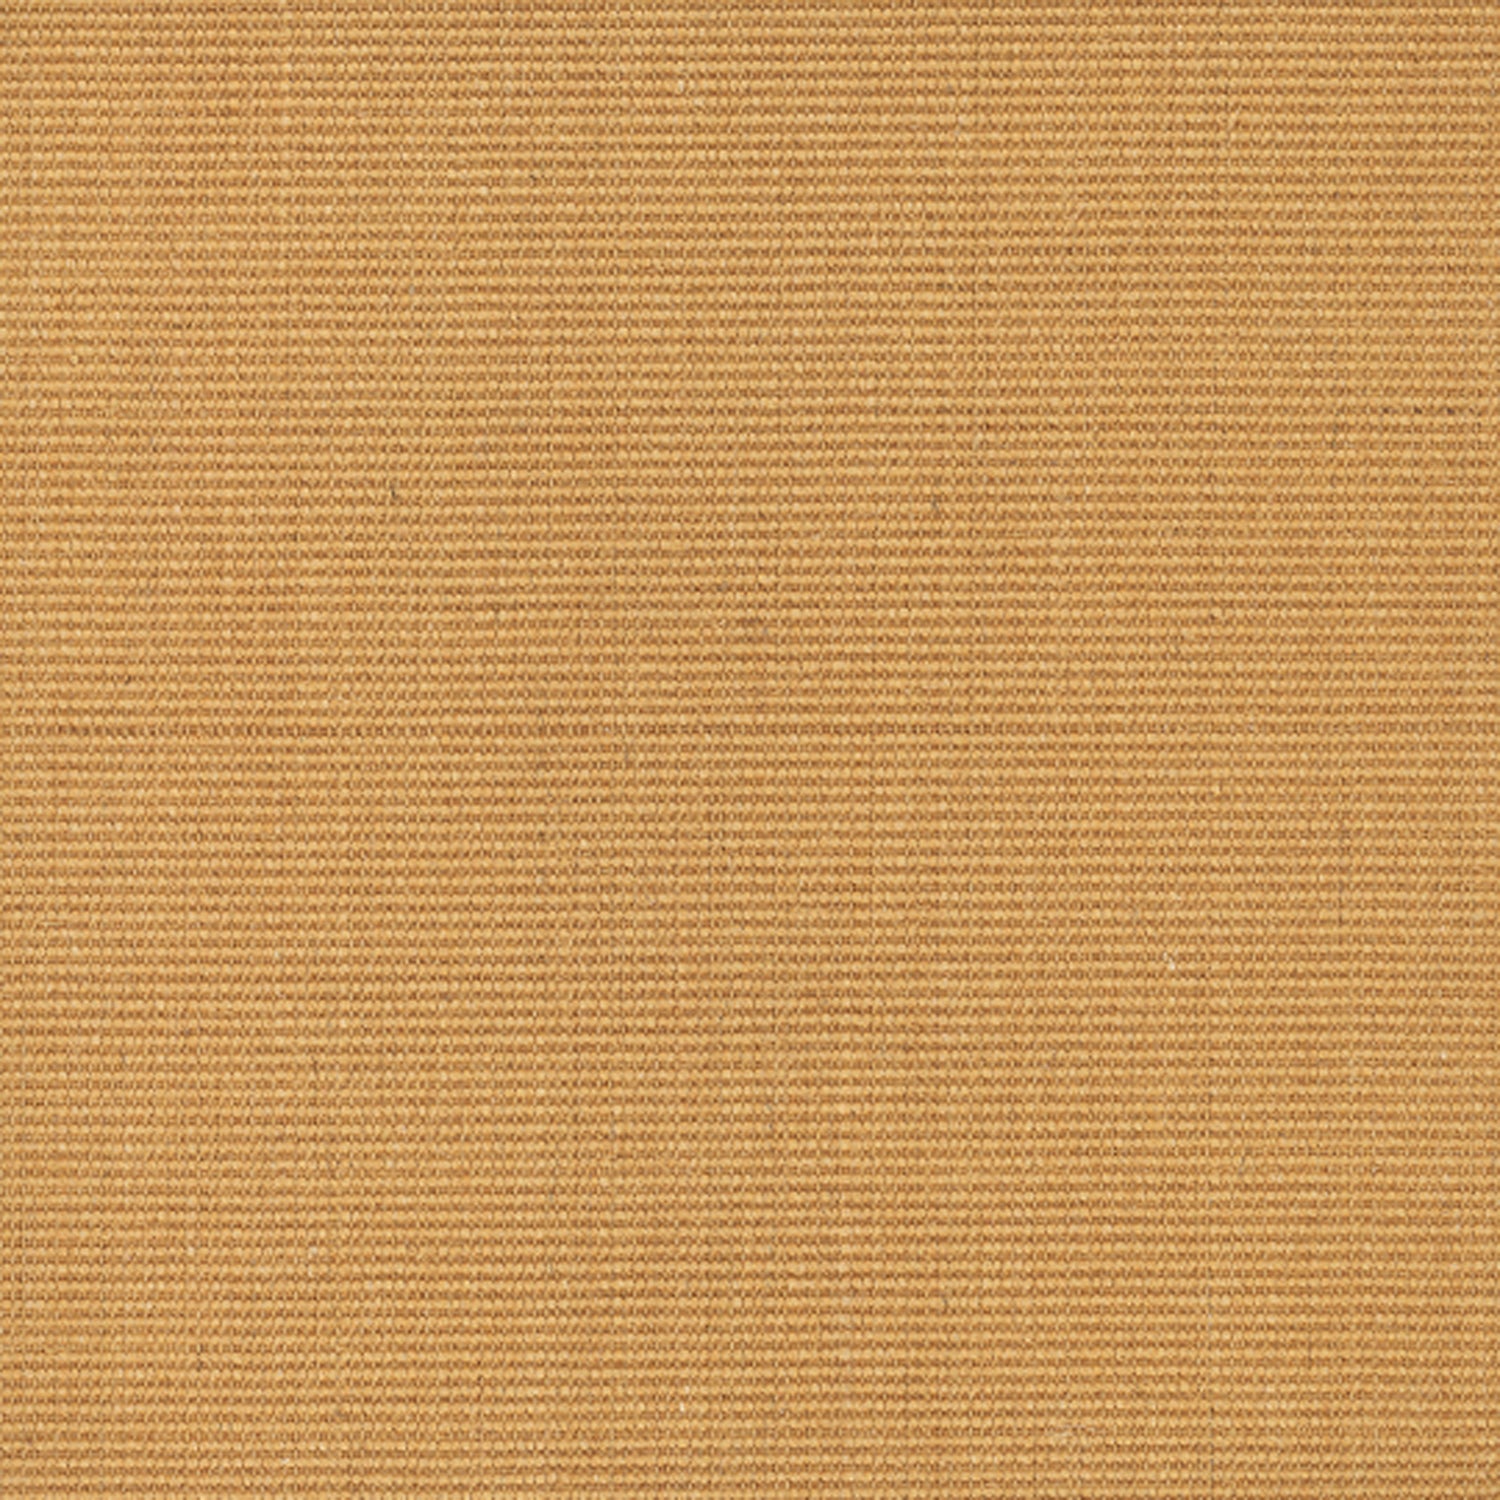 Sisal broadloom carpet swatch in a ribbed weave in "Adobe" gold.